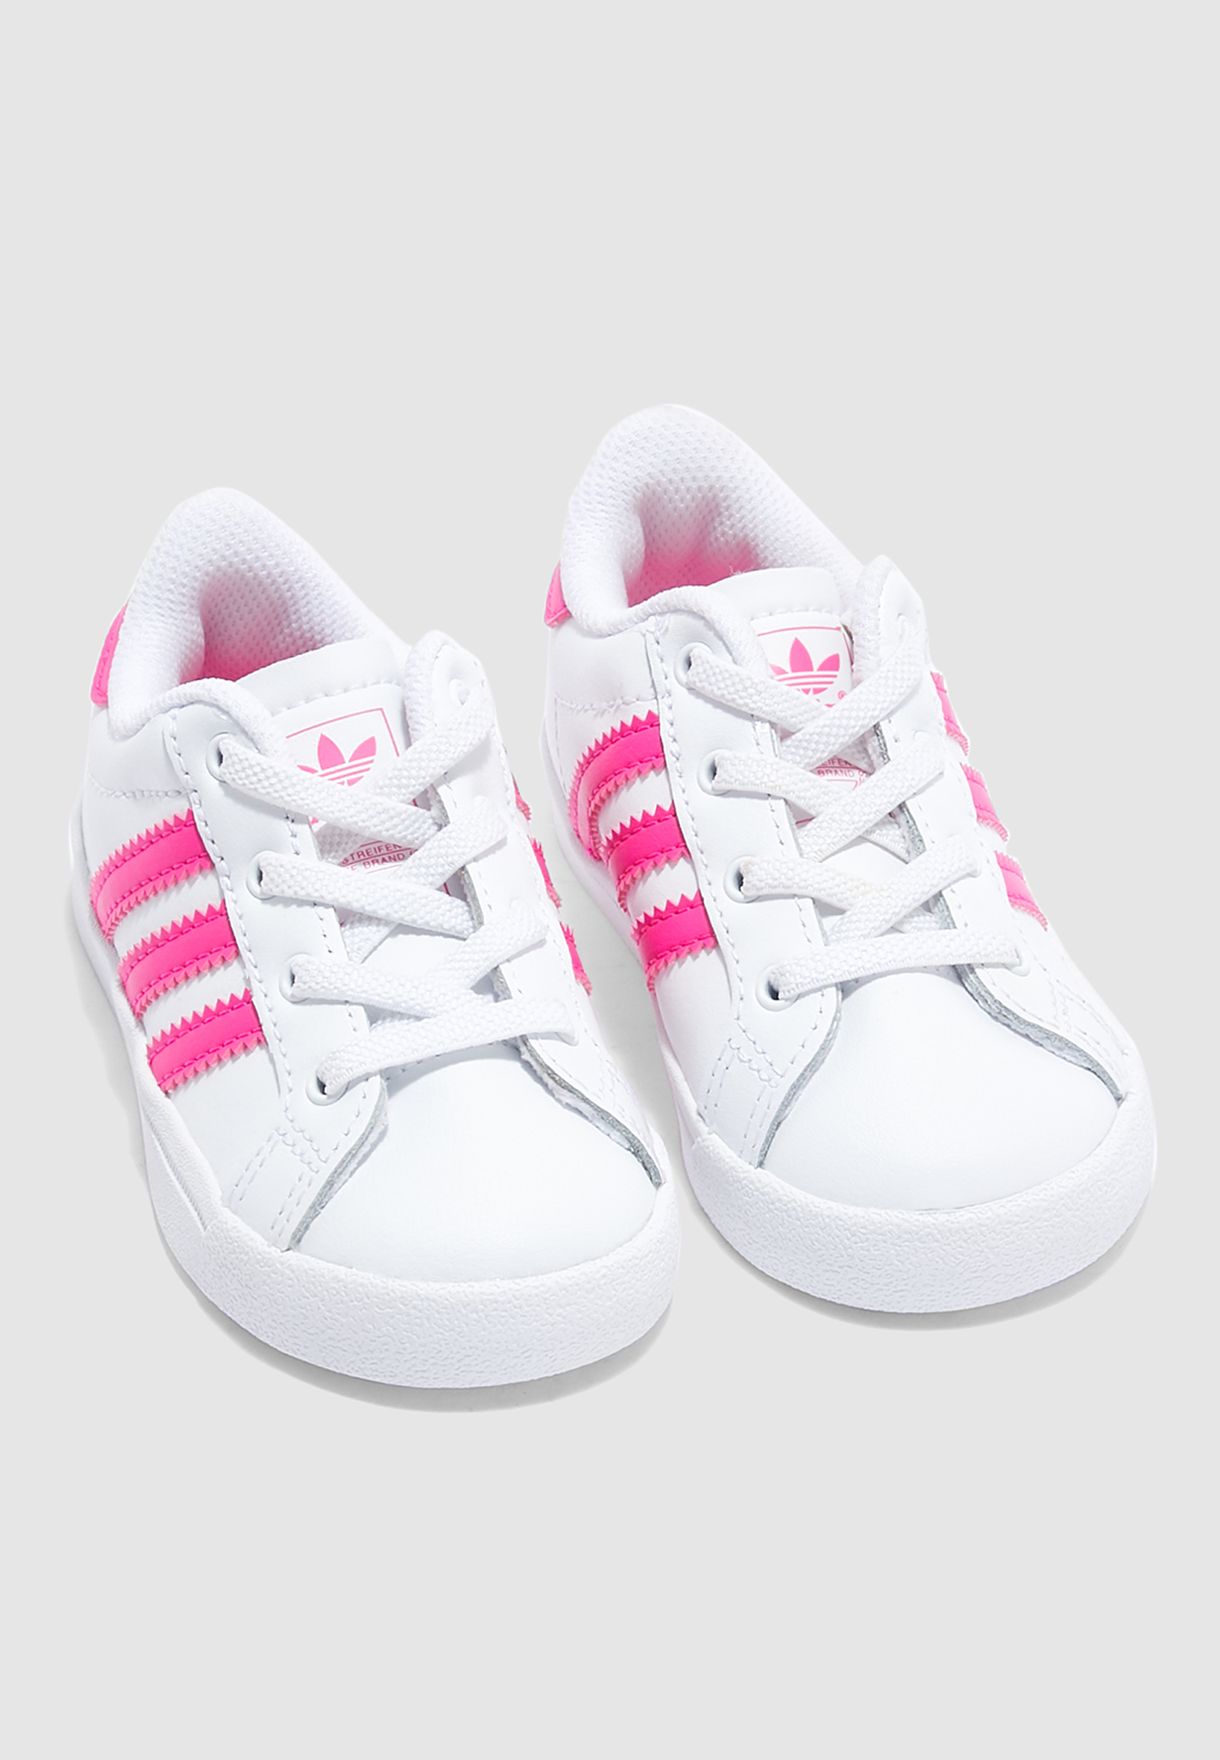 adidas coast star white pink